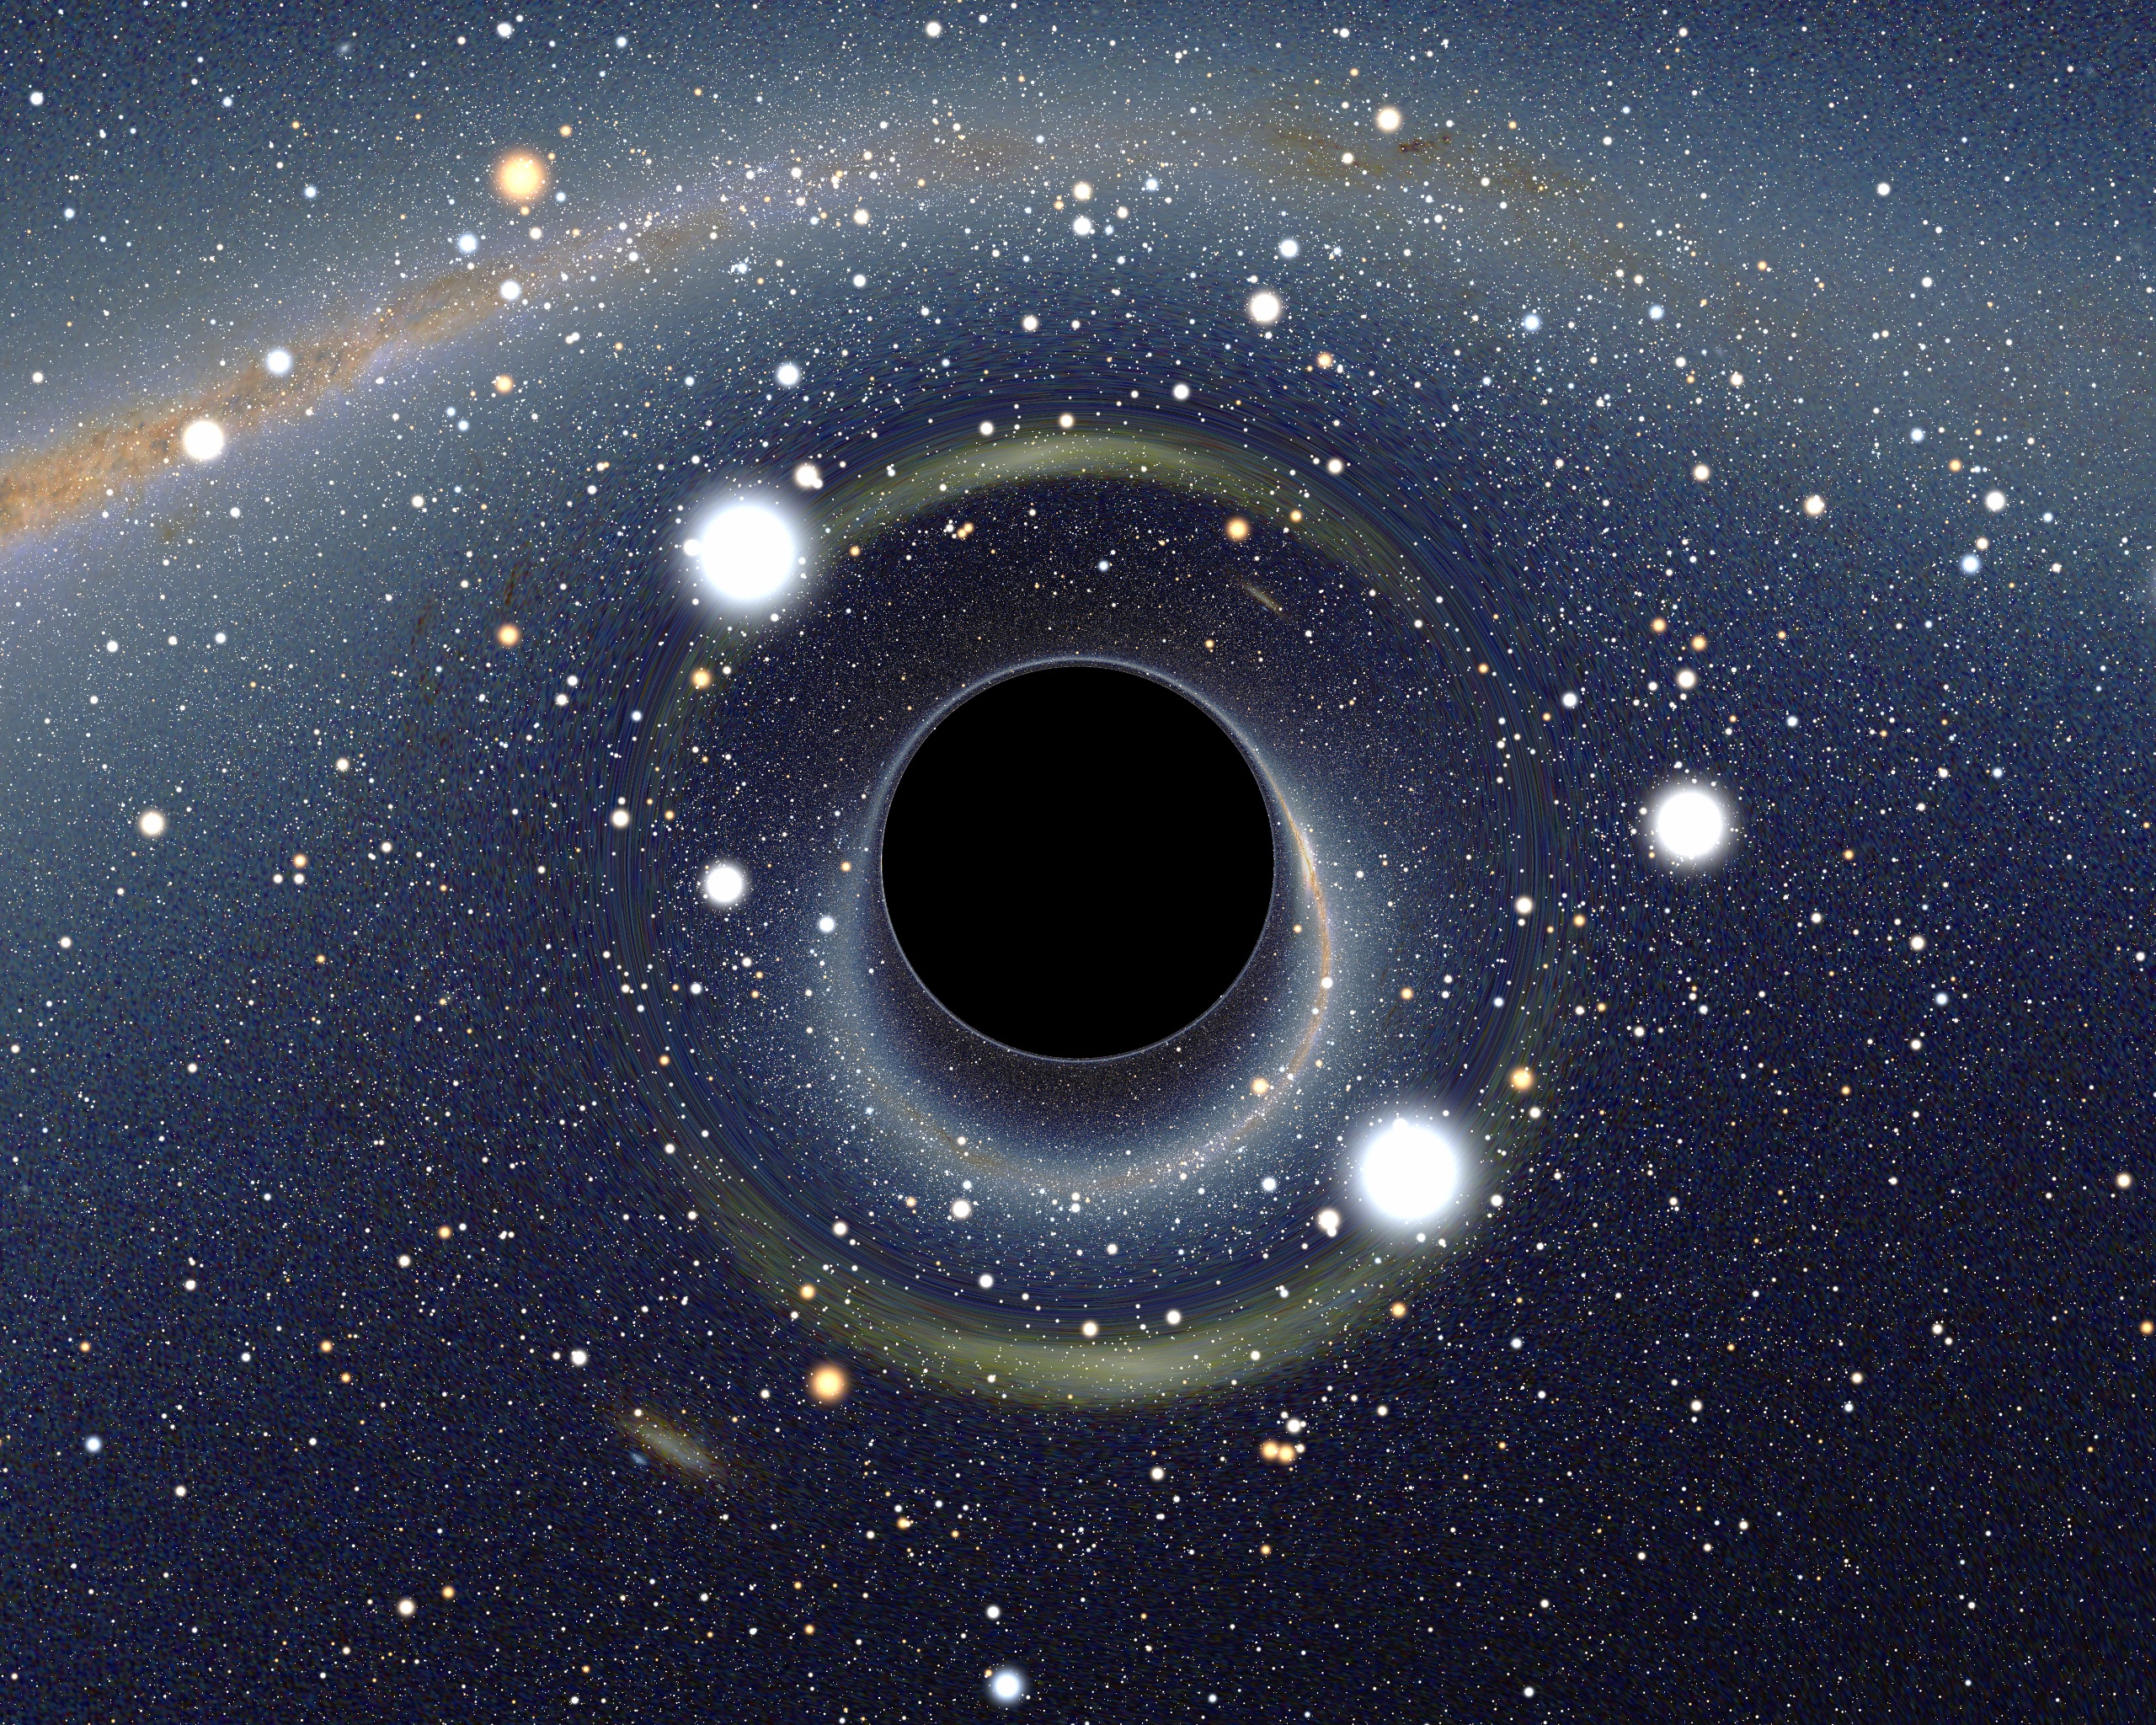 image of a black hole